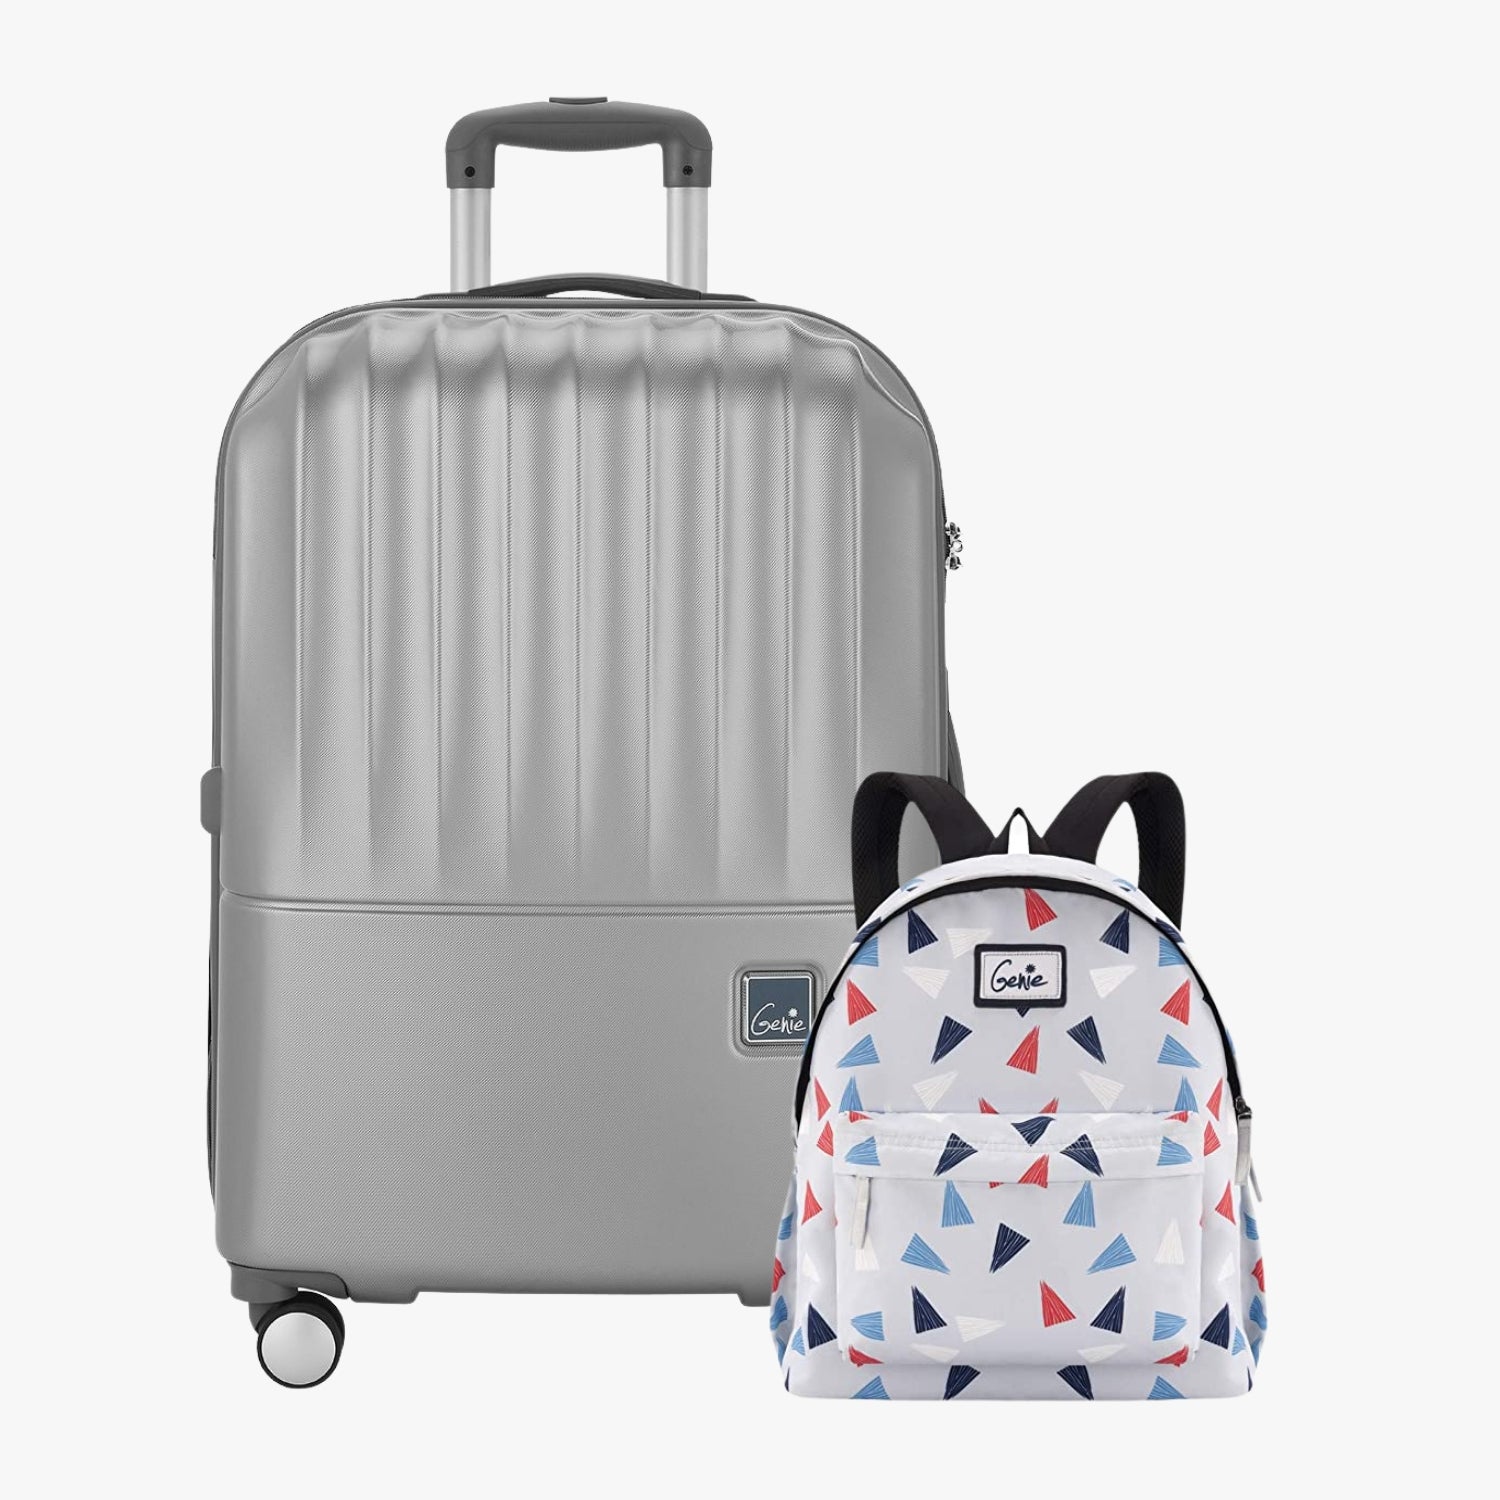 Genie Hard Trolley Bag and Daypack Combo